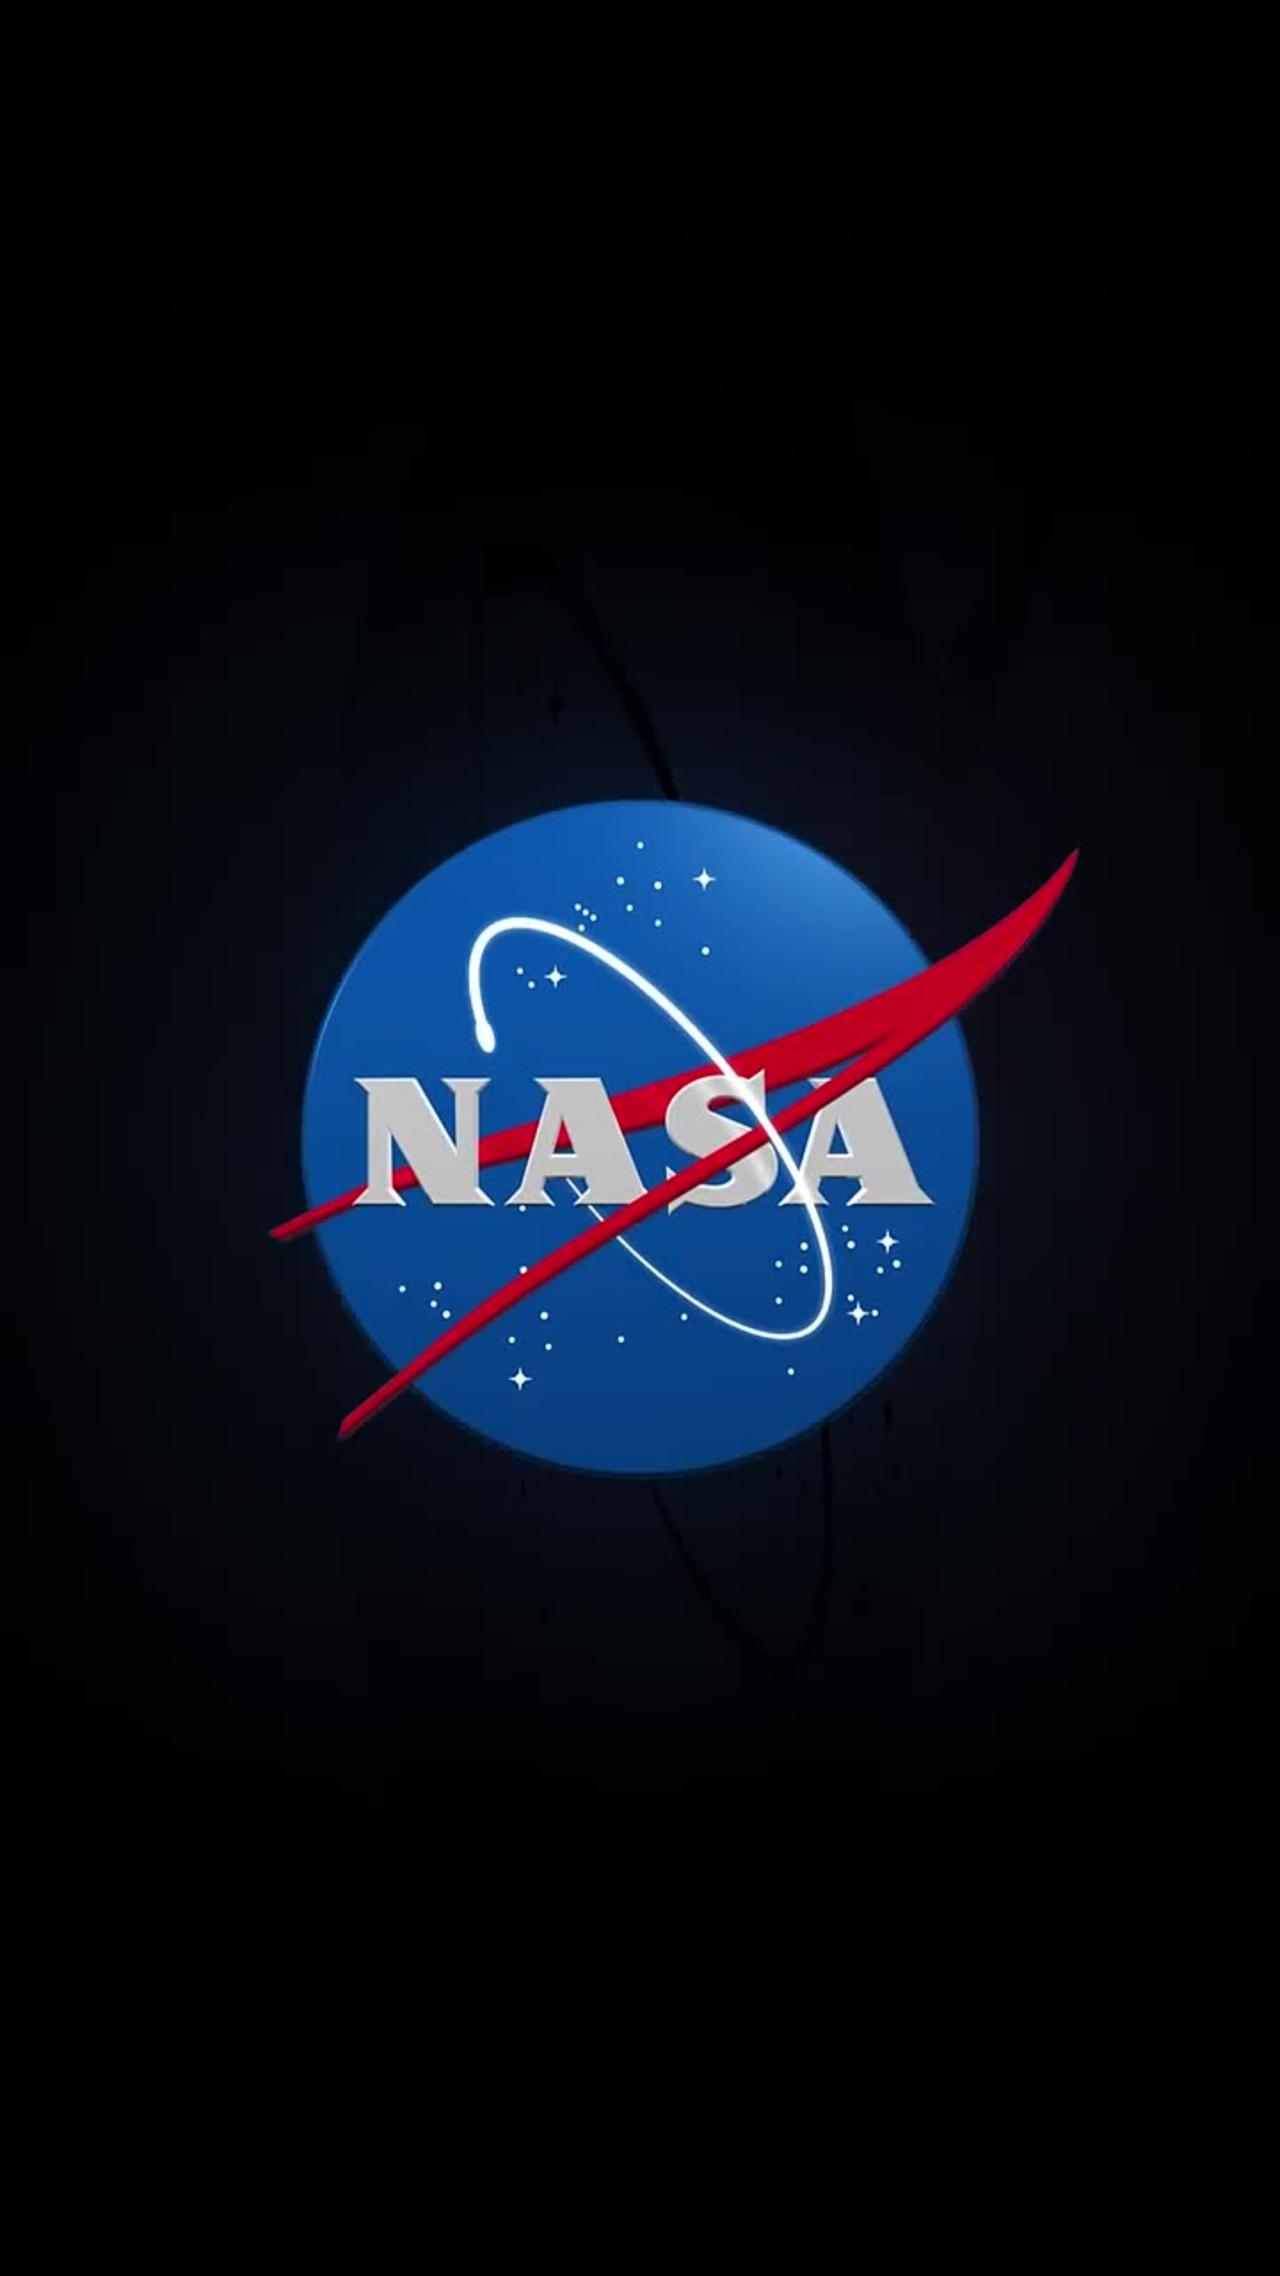 Artemis II Astronauts’ First Look at Their Lunar Spacecraft (1)